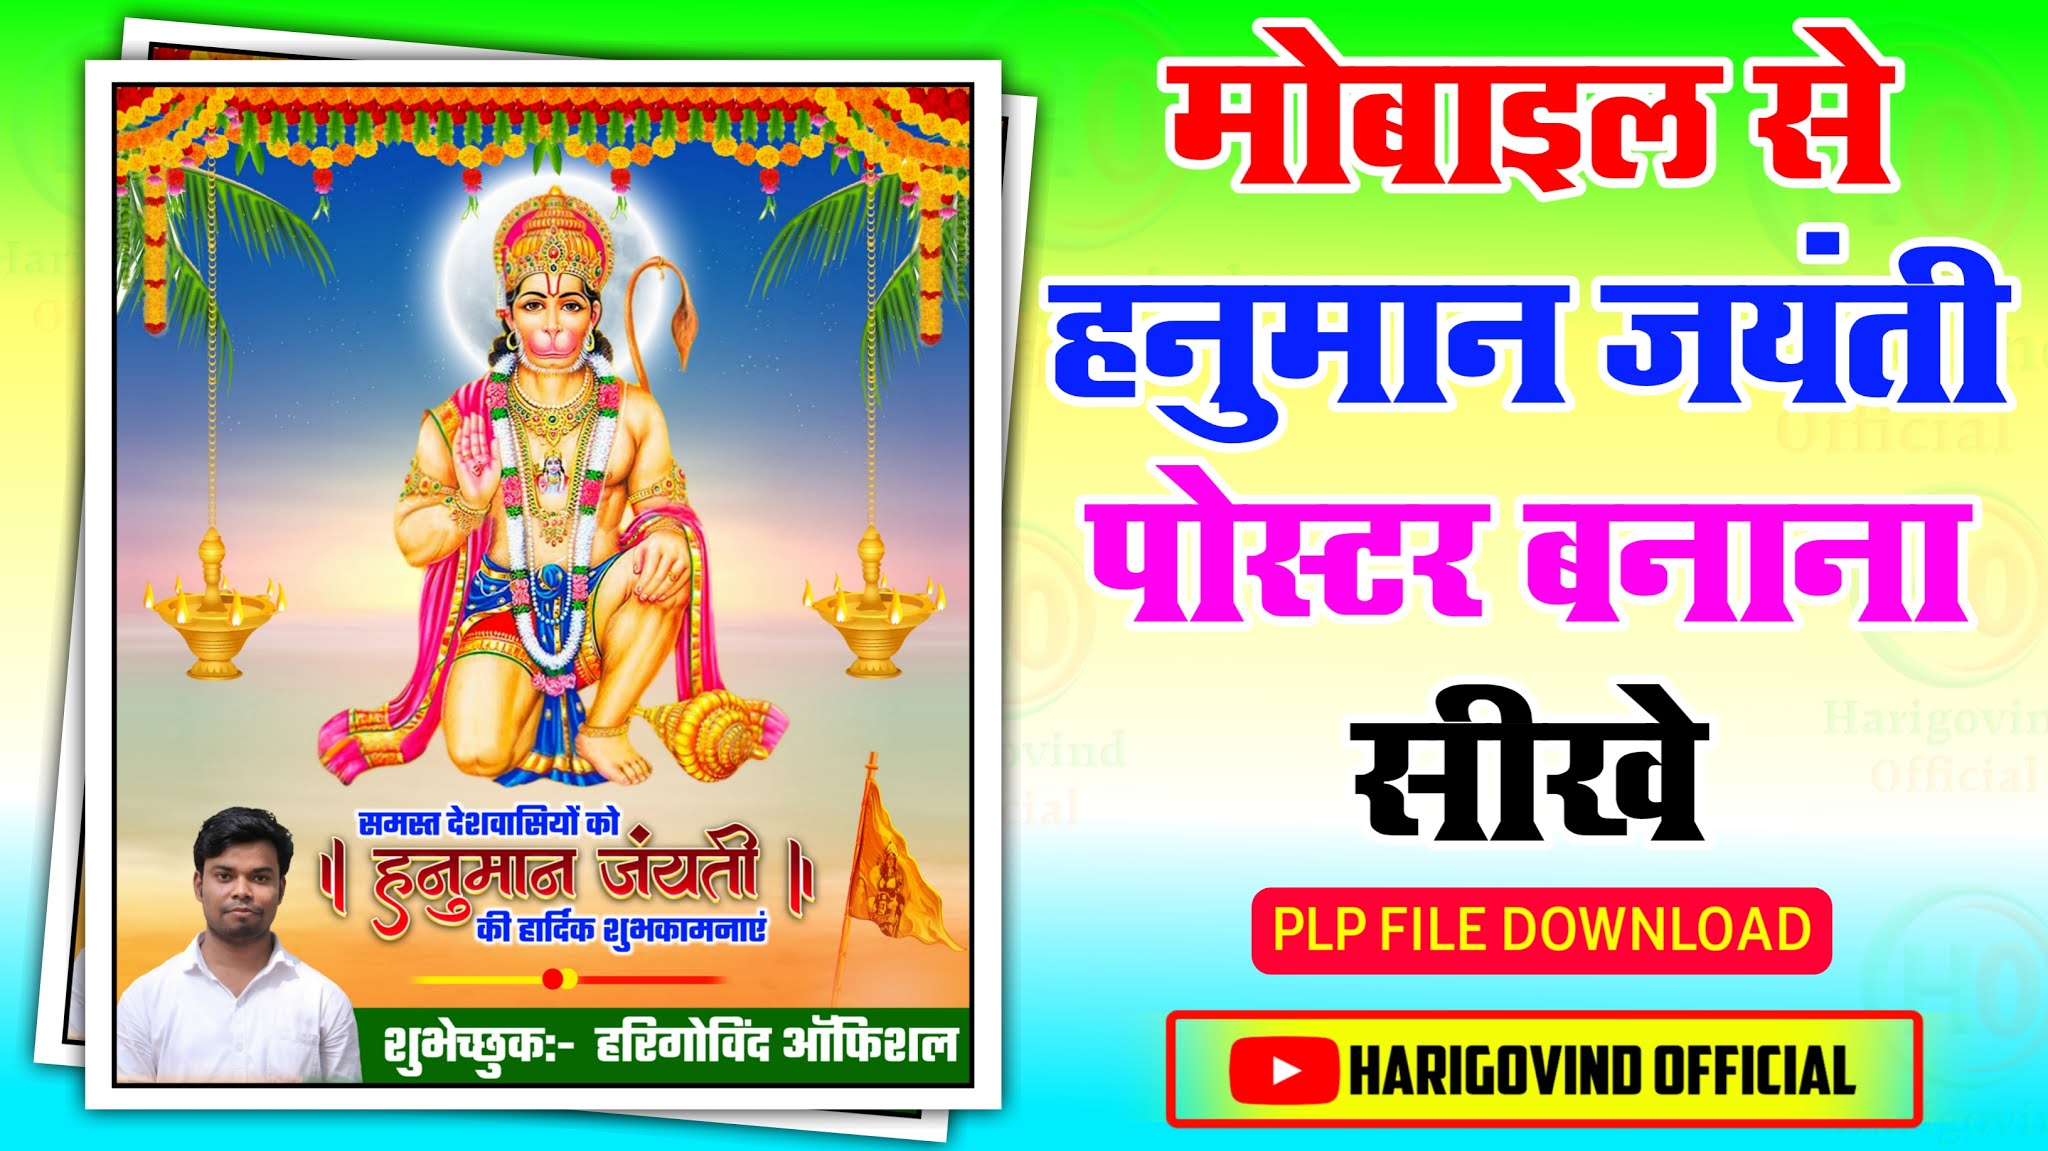 Happy Hanuman Jayanti Greeting Wallpaper Poster Vector Flying Hanuman  Silhouette Illustration Banner Stock Illustration  Download Image Now   iStock